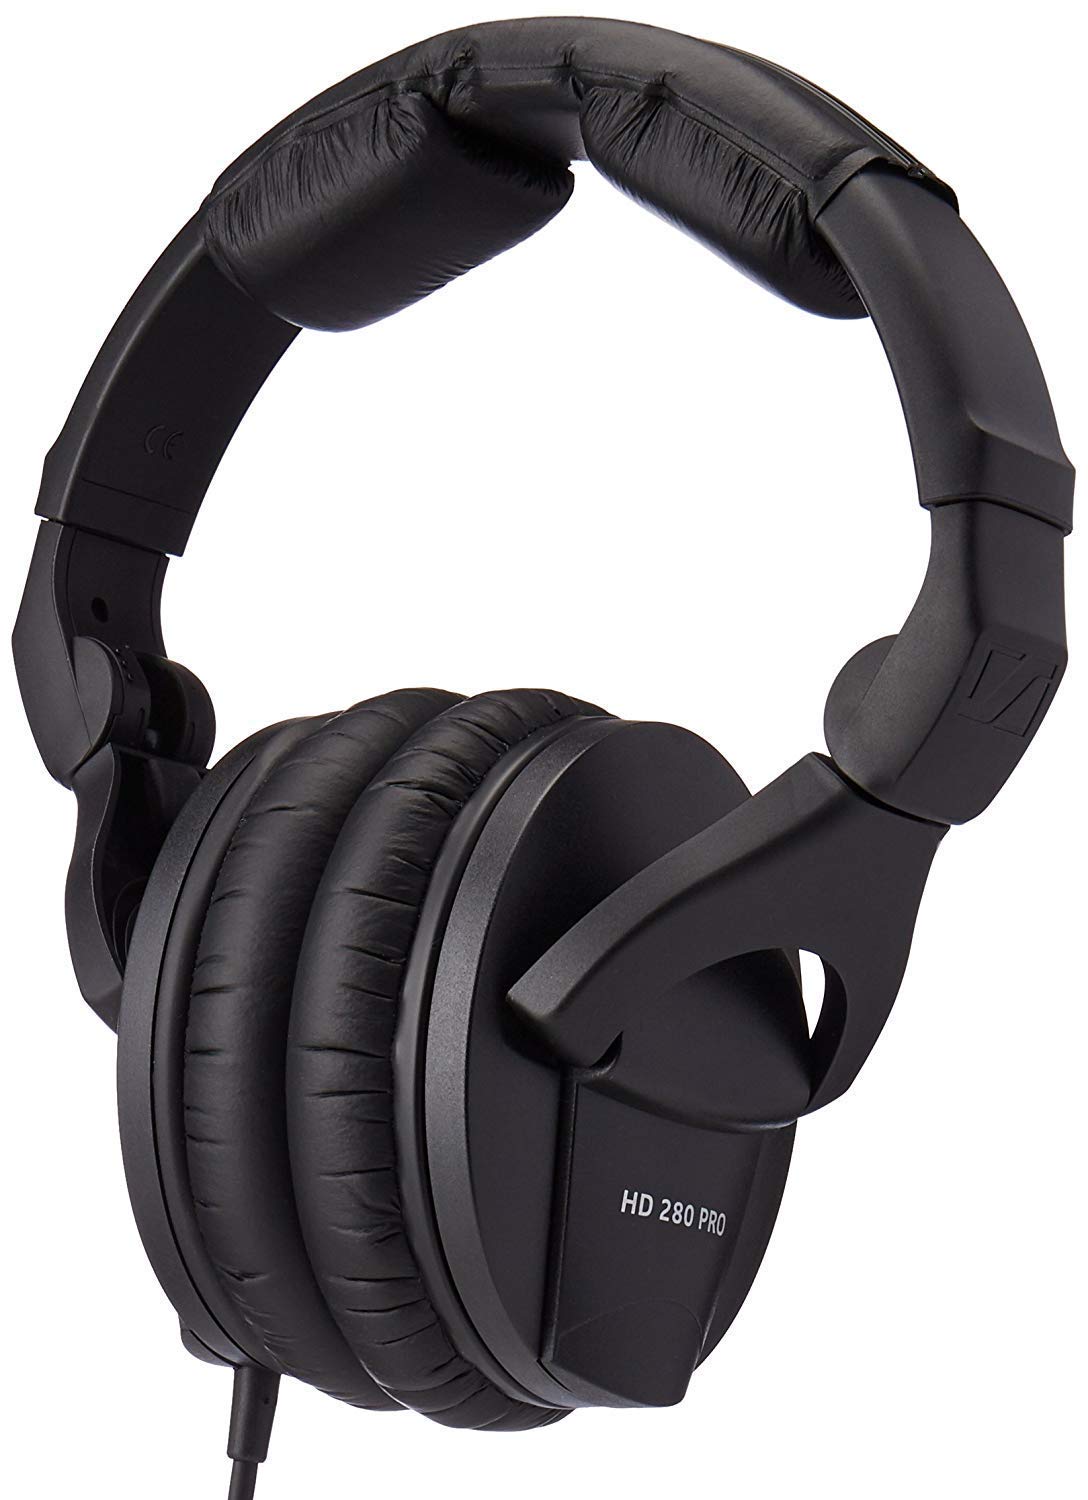 Sennheiser Pro Audio سماعات رأس احترافية عالية الدقة 280 PRO للمراقبة فوق الأذن